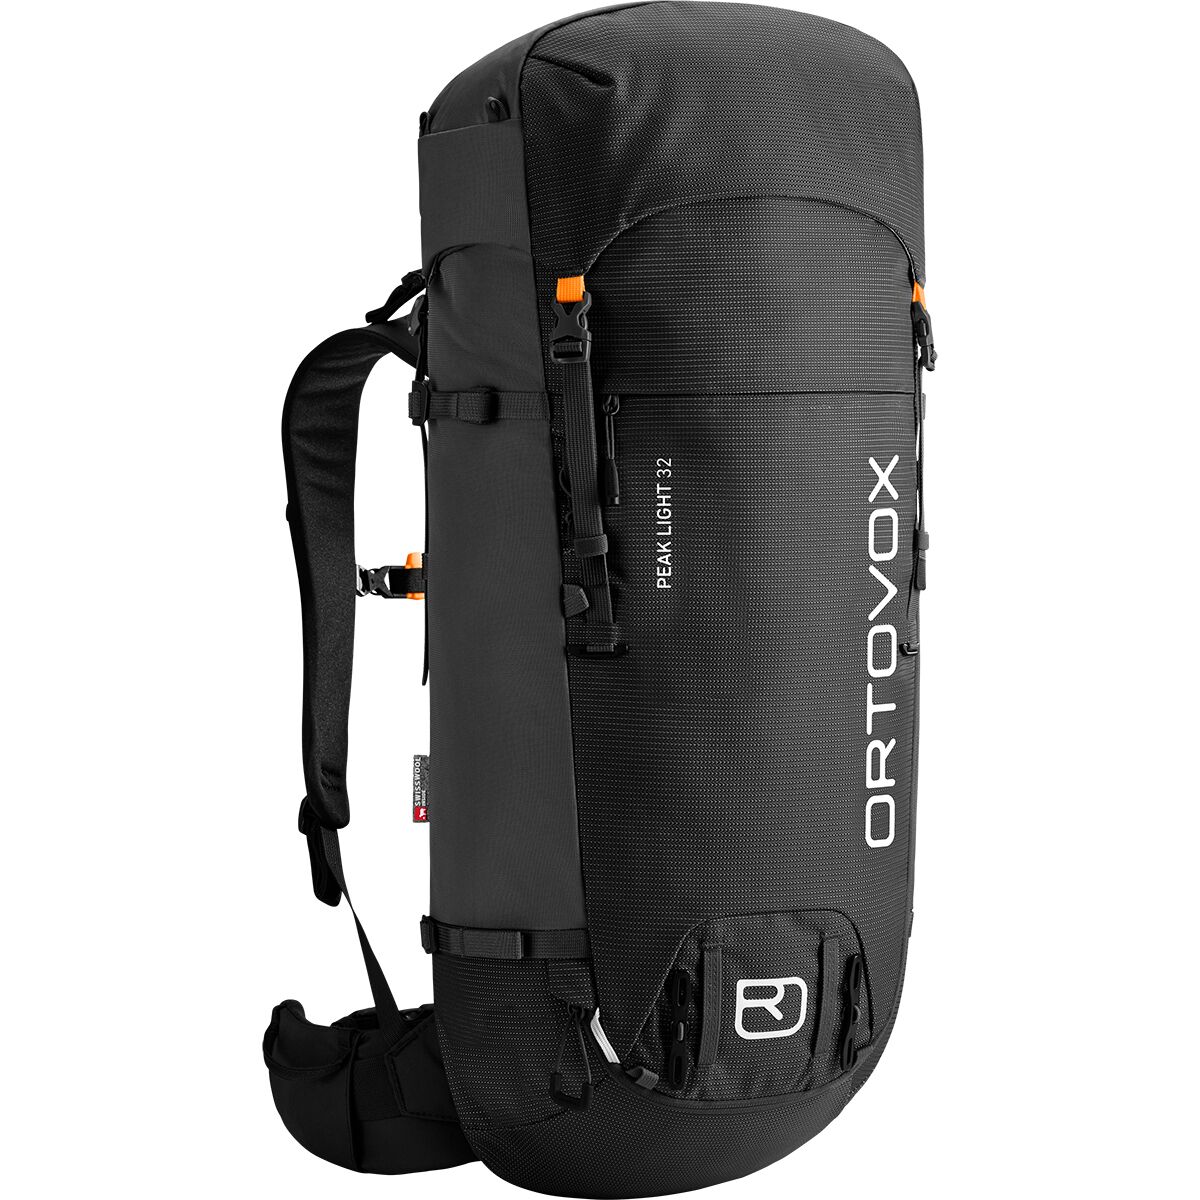 Voorspeller longontsteking raken Ortovox Peak Light 32L Backpack - Accessories